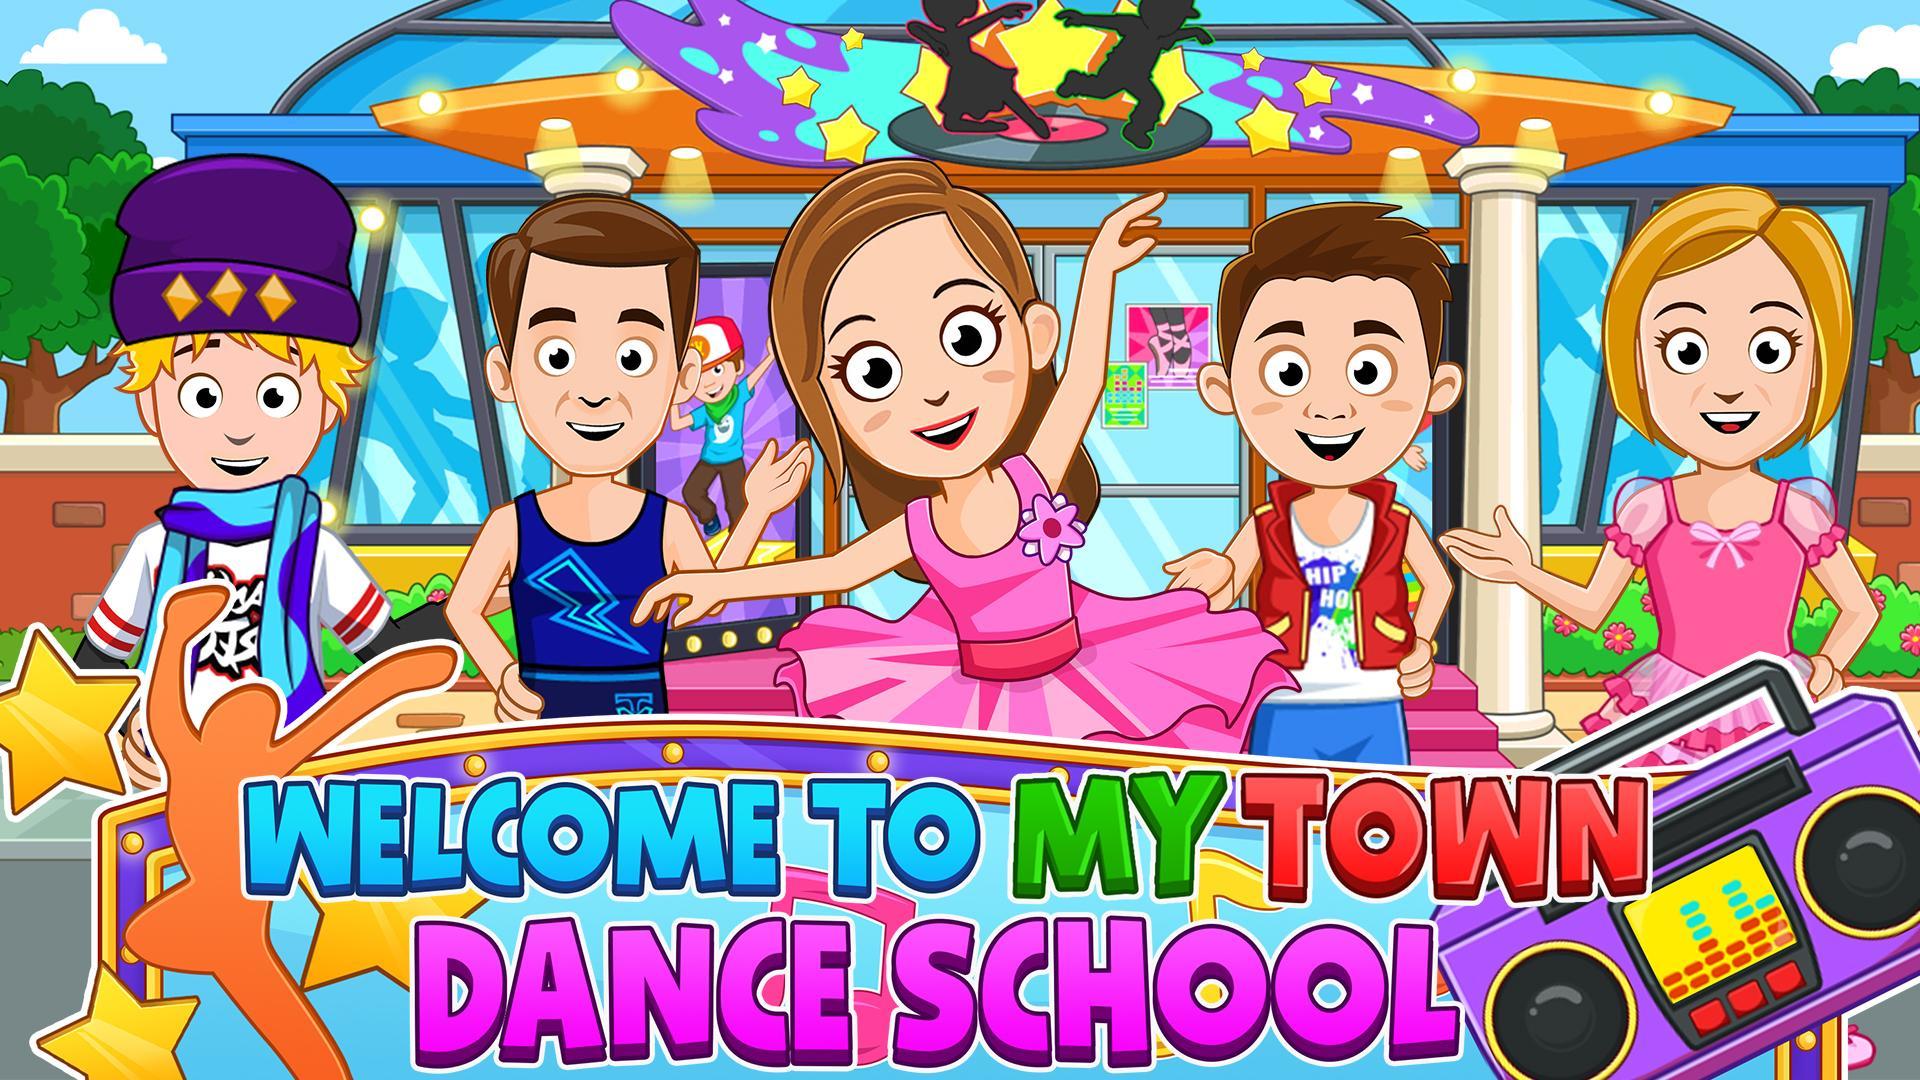 Screenshot 1 of My Town: Танцевальная школа Веселая игра 7.00.15